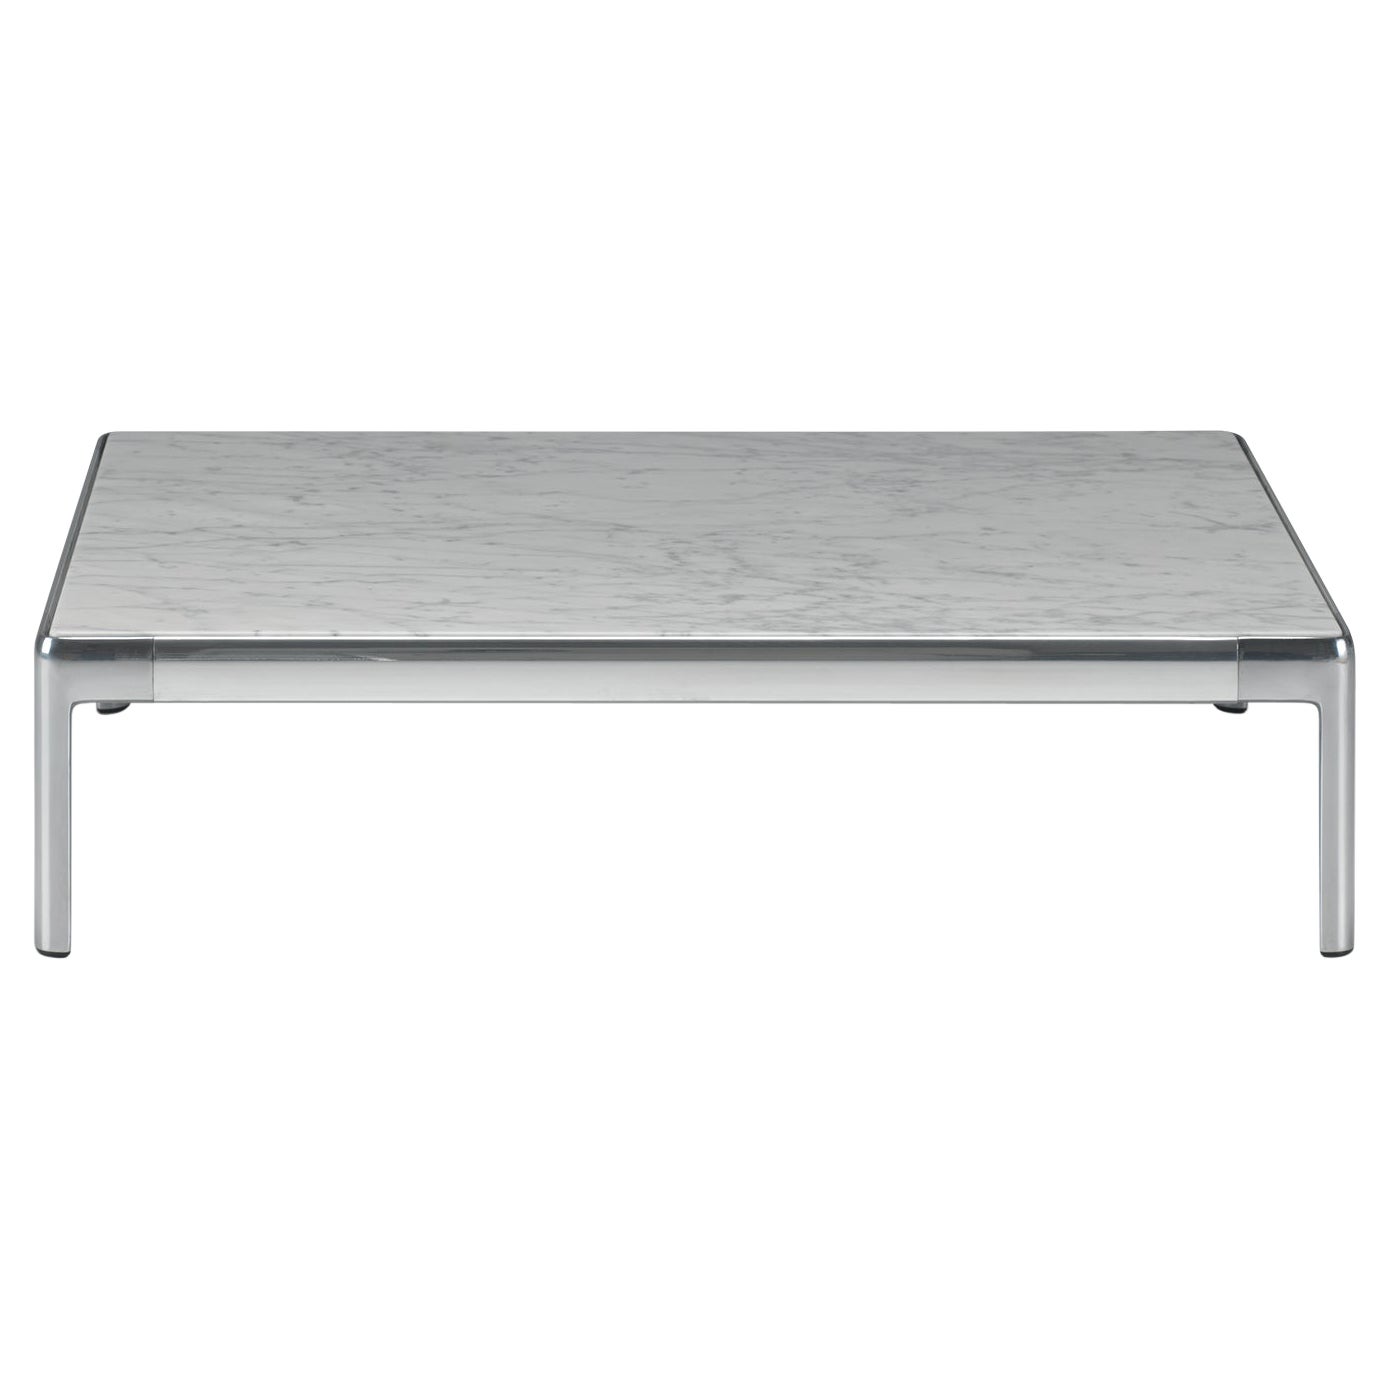 Alias P17 AluminiumZen Niedriger Tisch 80X95 mit Marmorplatte und poliertem Aluminiumrahmen